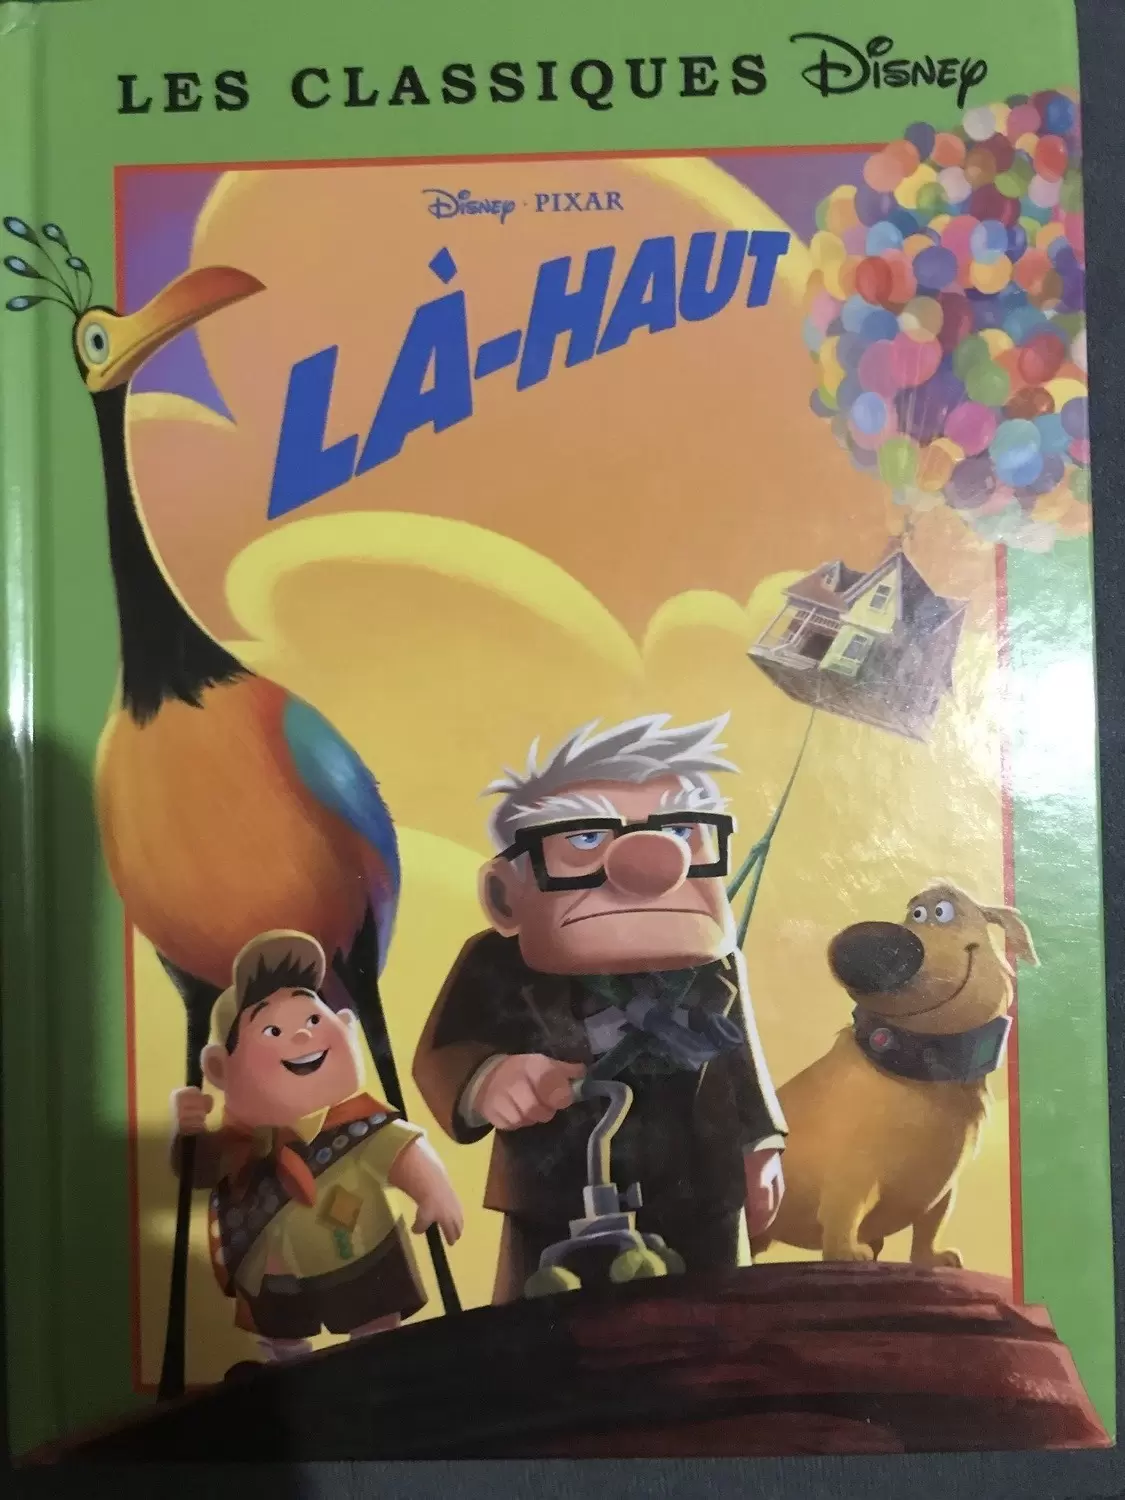 Les Classiques Disney - Edition France Loisirs - Là-Haut